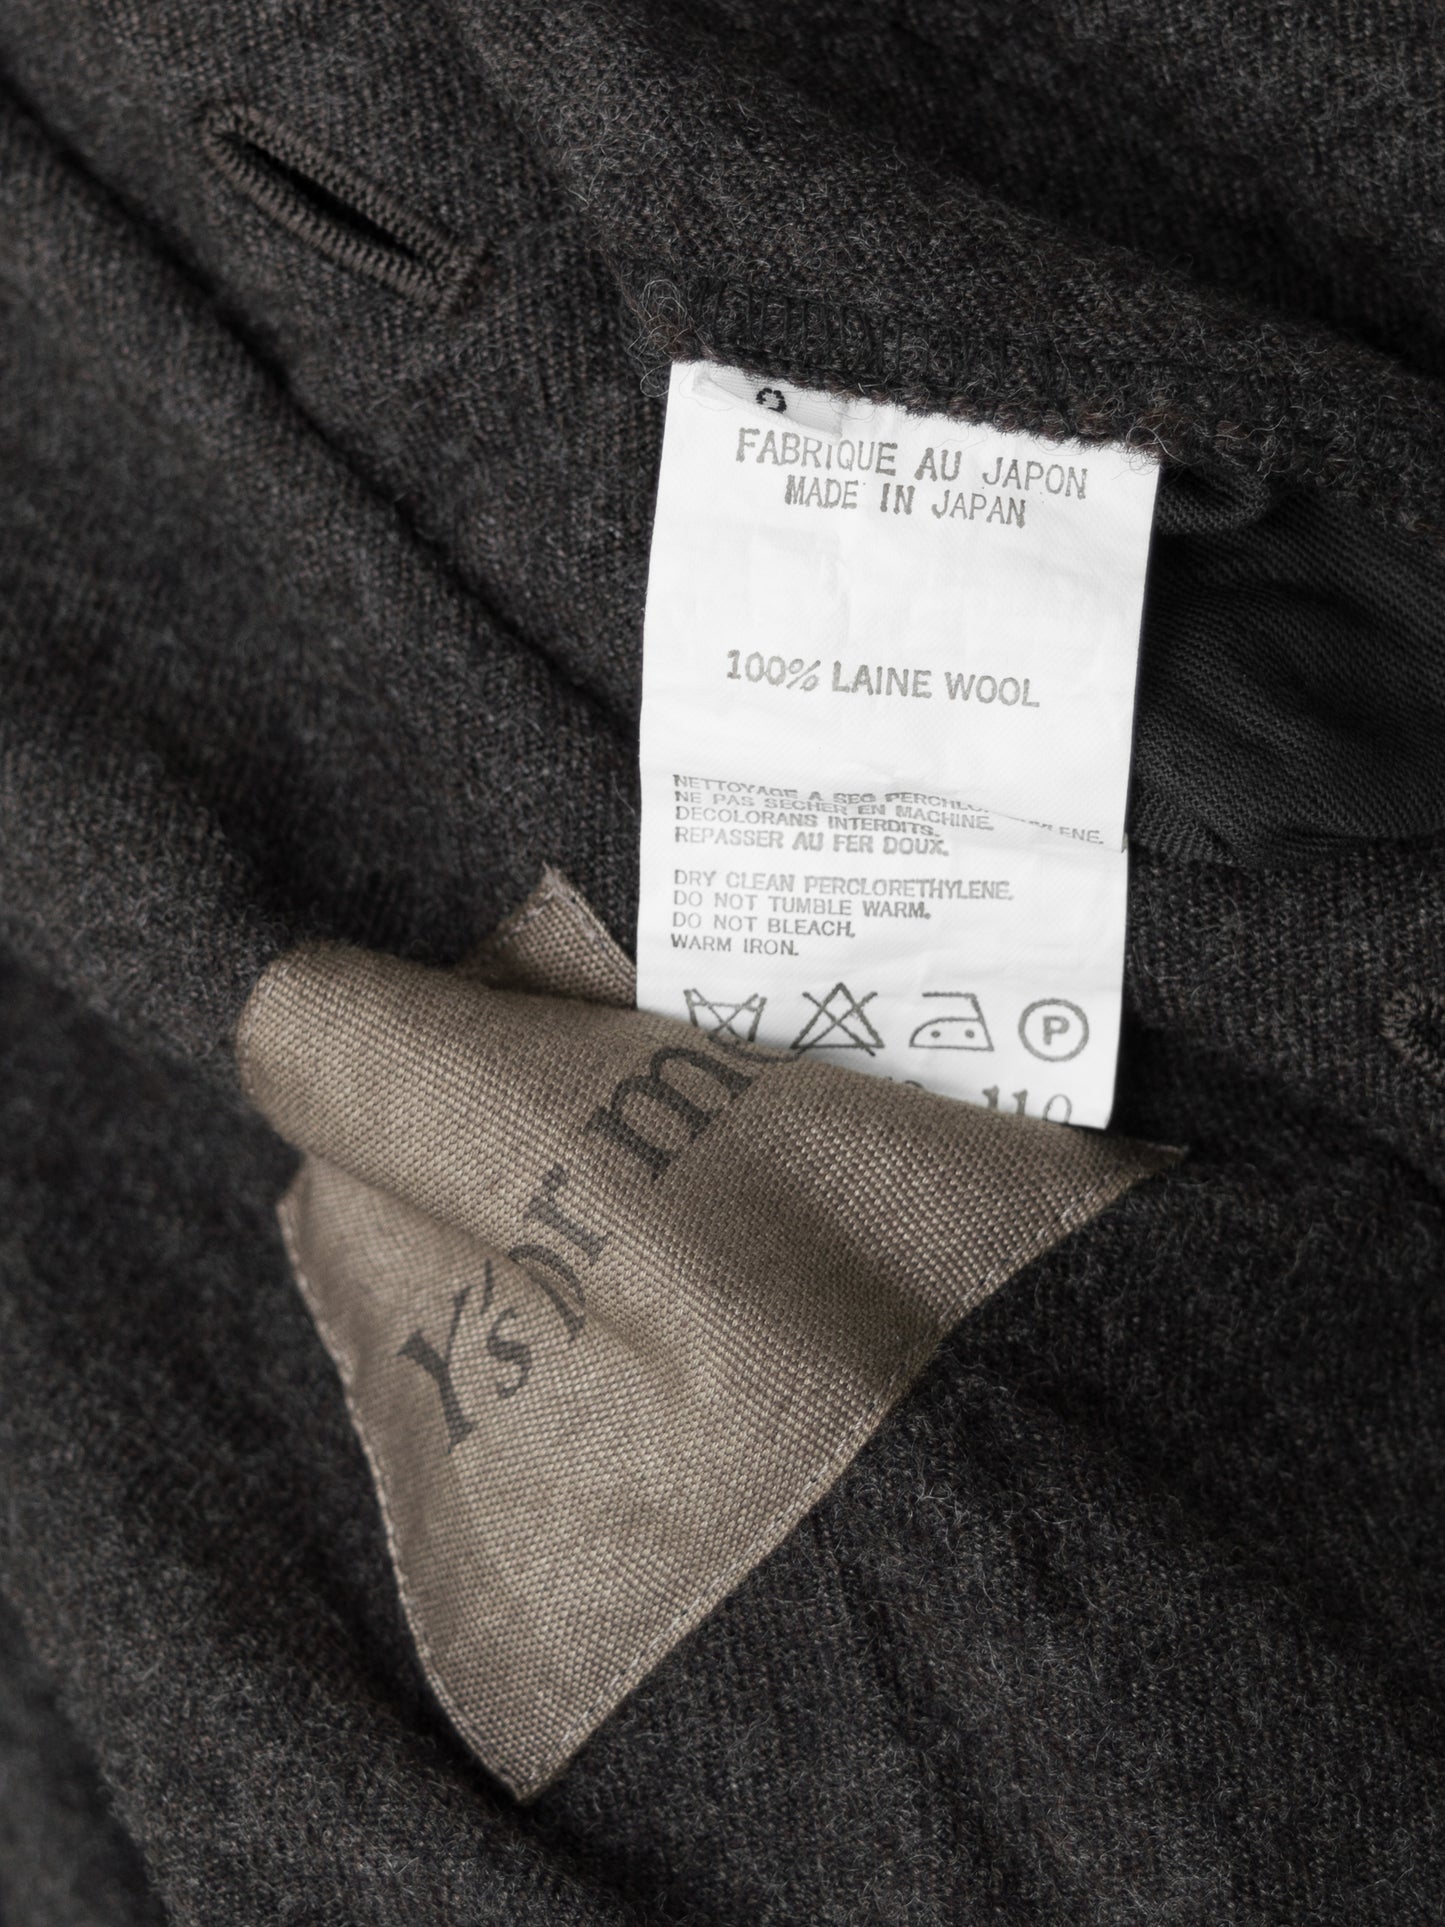 a/w 03 tailored liner jacket soil brown ∙ wool ∙ medium